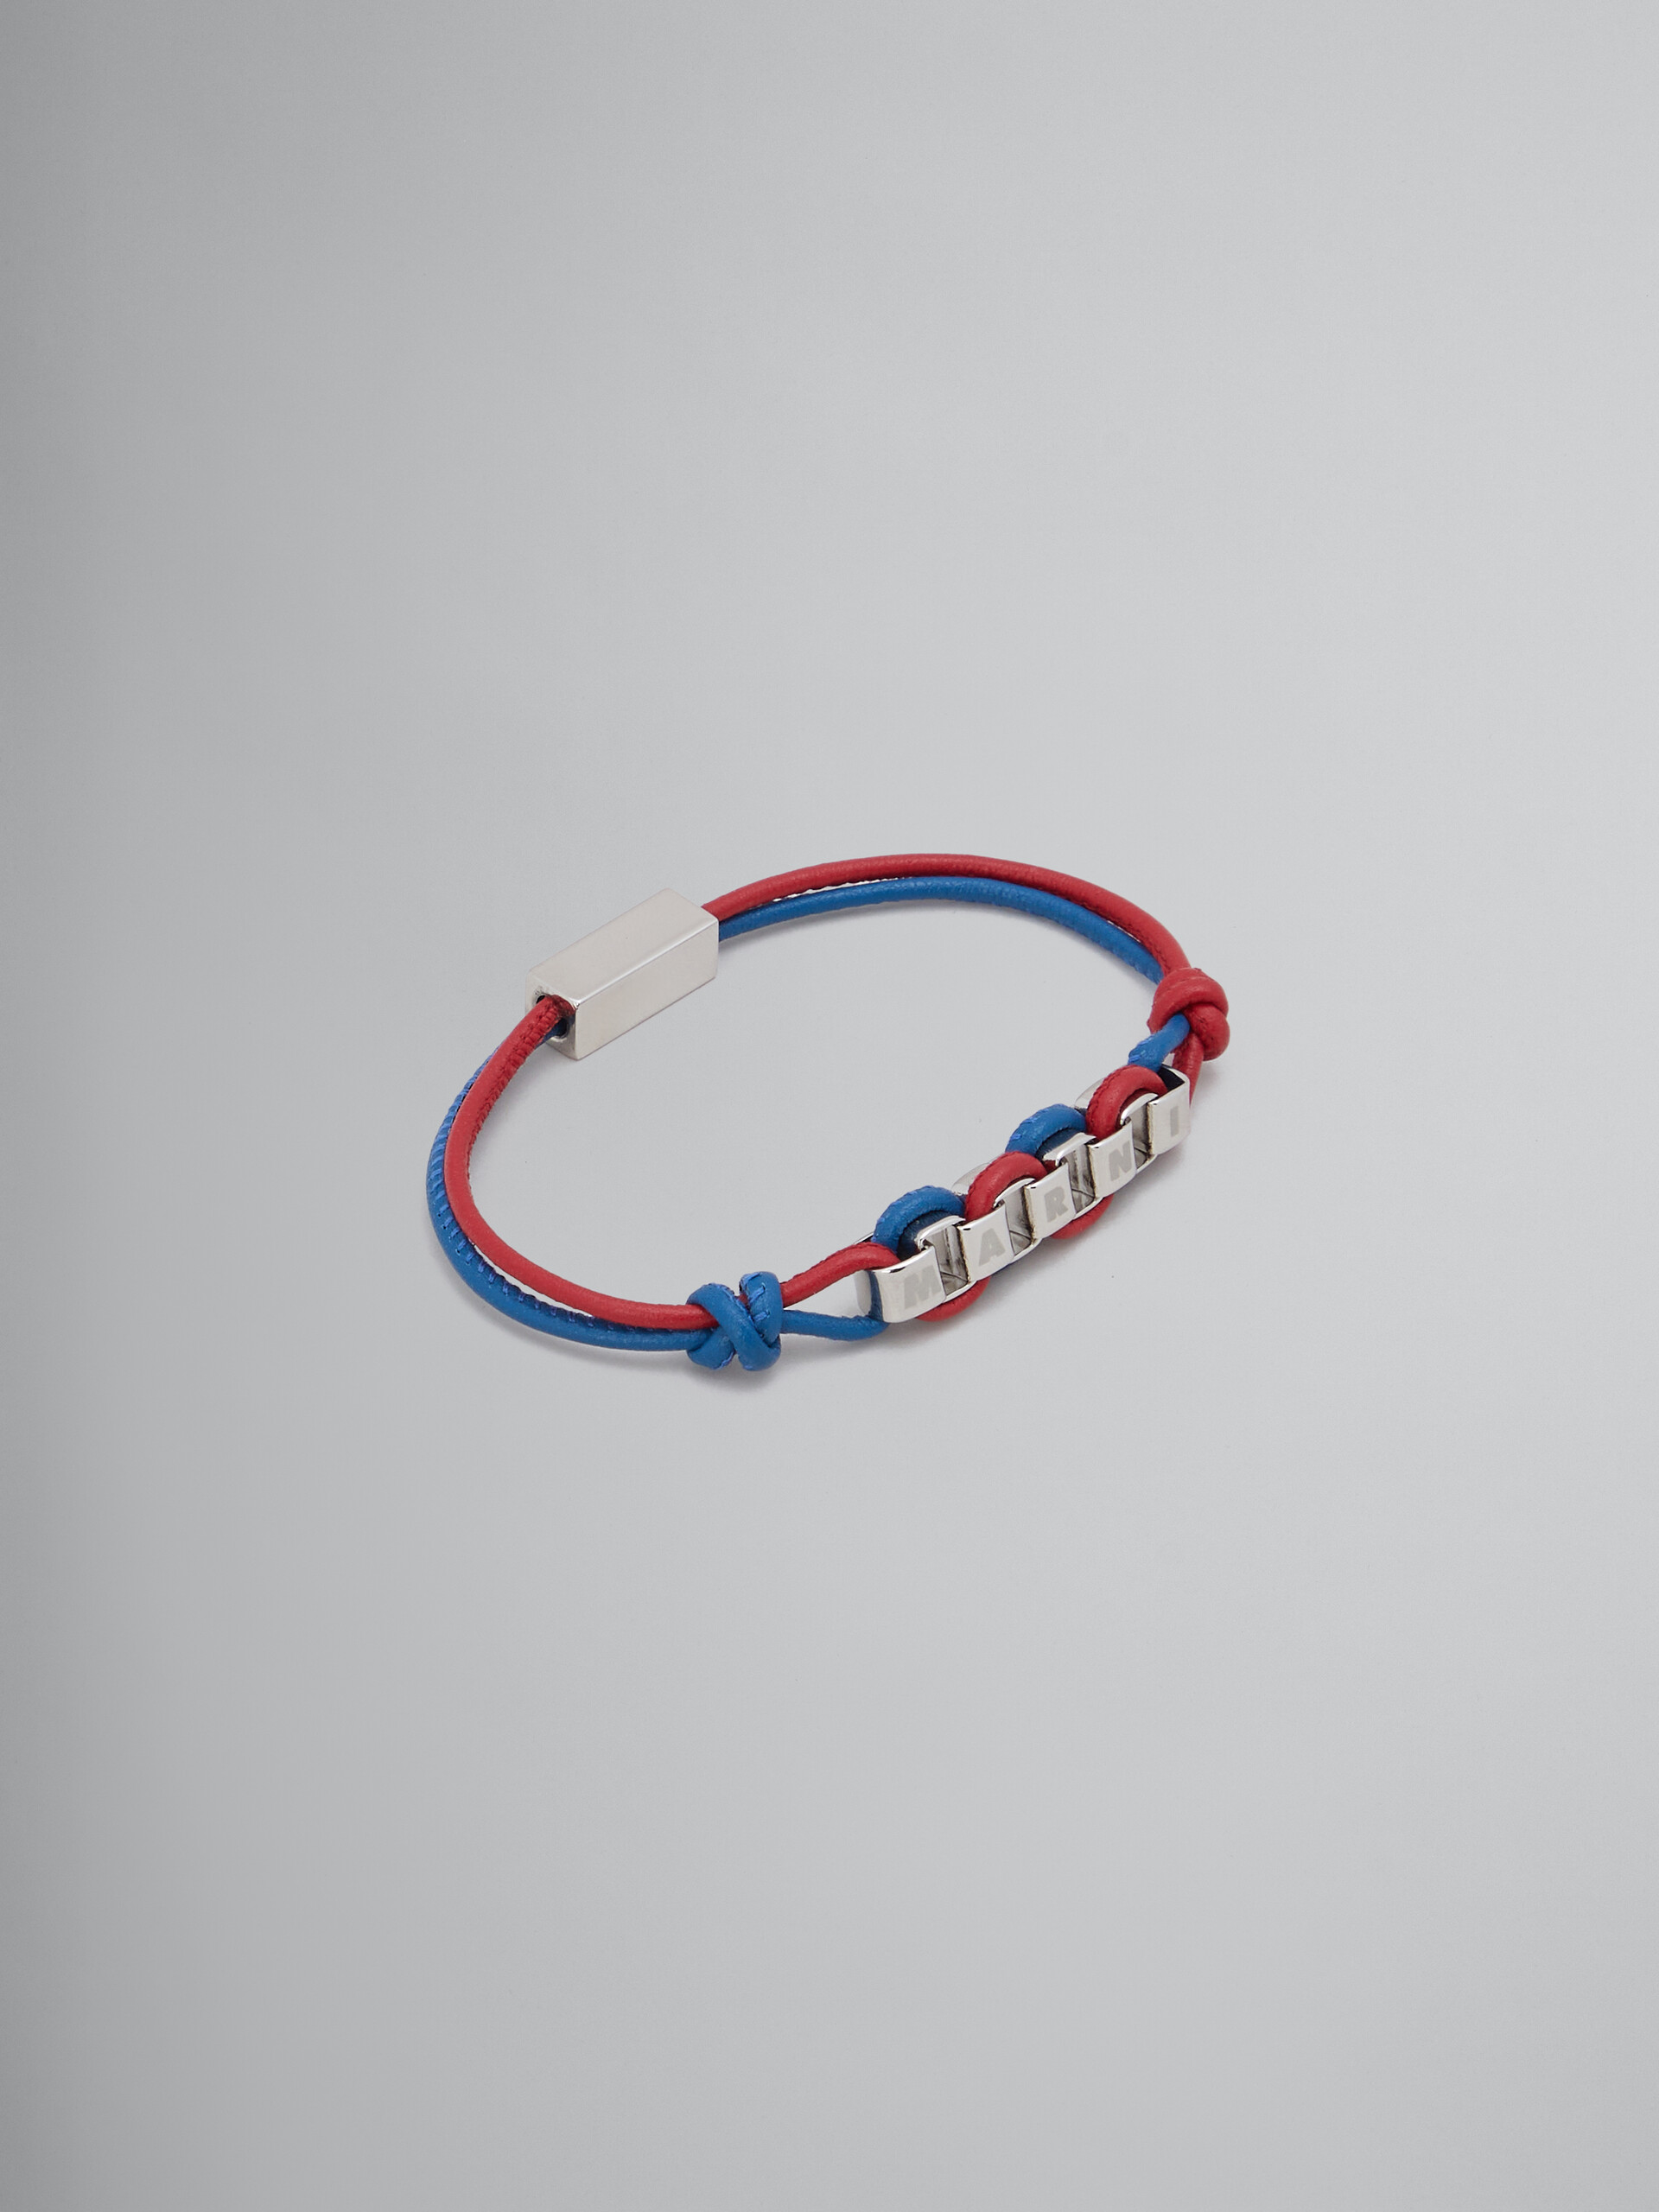 Review: Light Blue Leather Bracelet from Pandora Summer 2016 - Mora Pandora